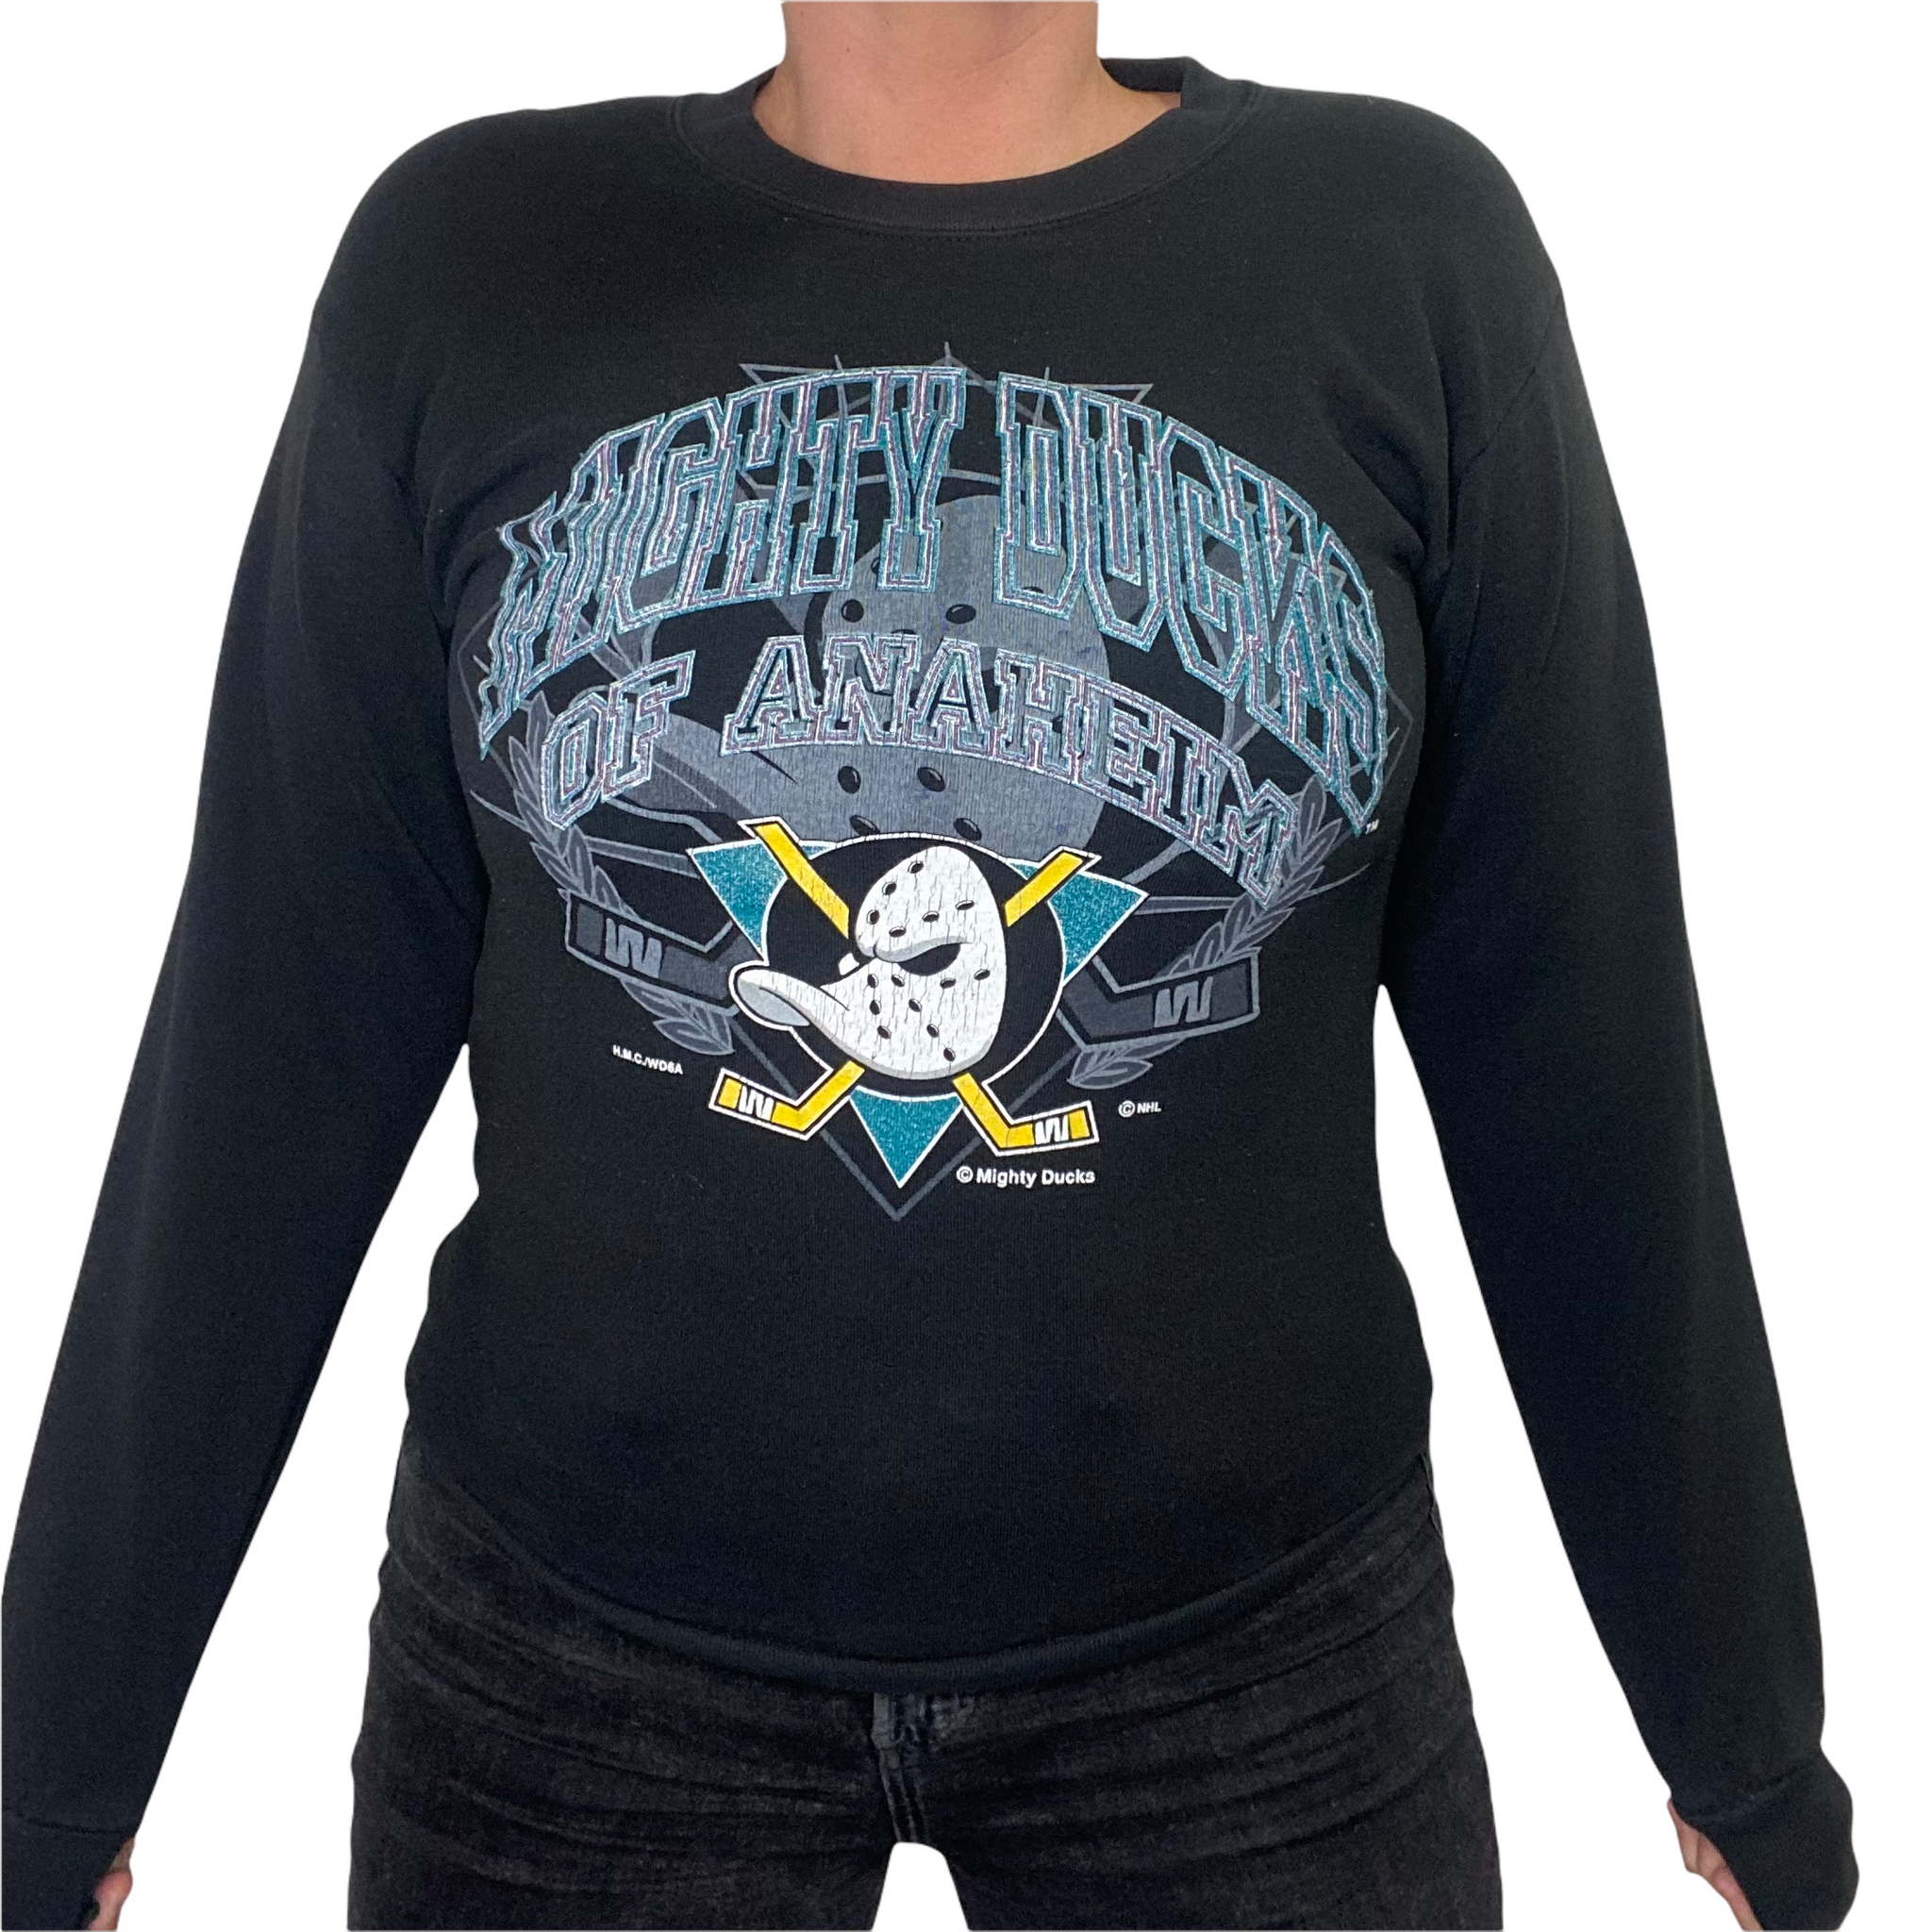 Mighty Ducks of Anaheim hockey logo vintage shirt, hoodie, sweater